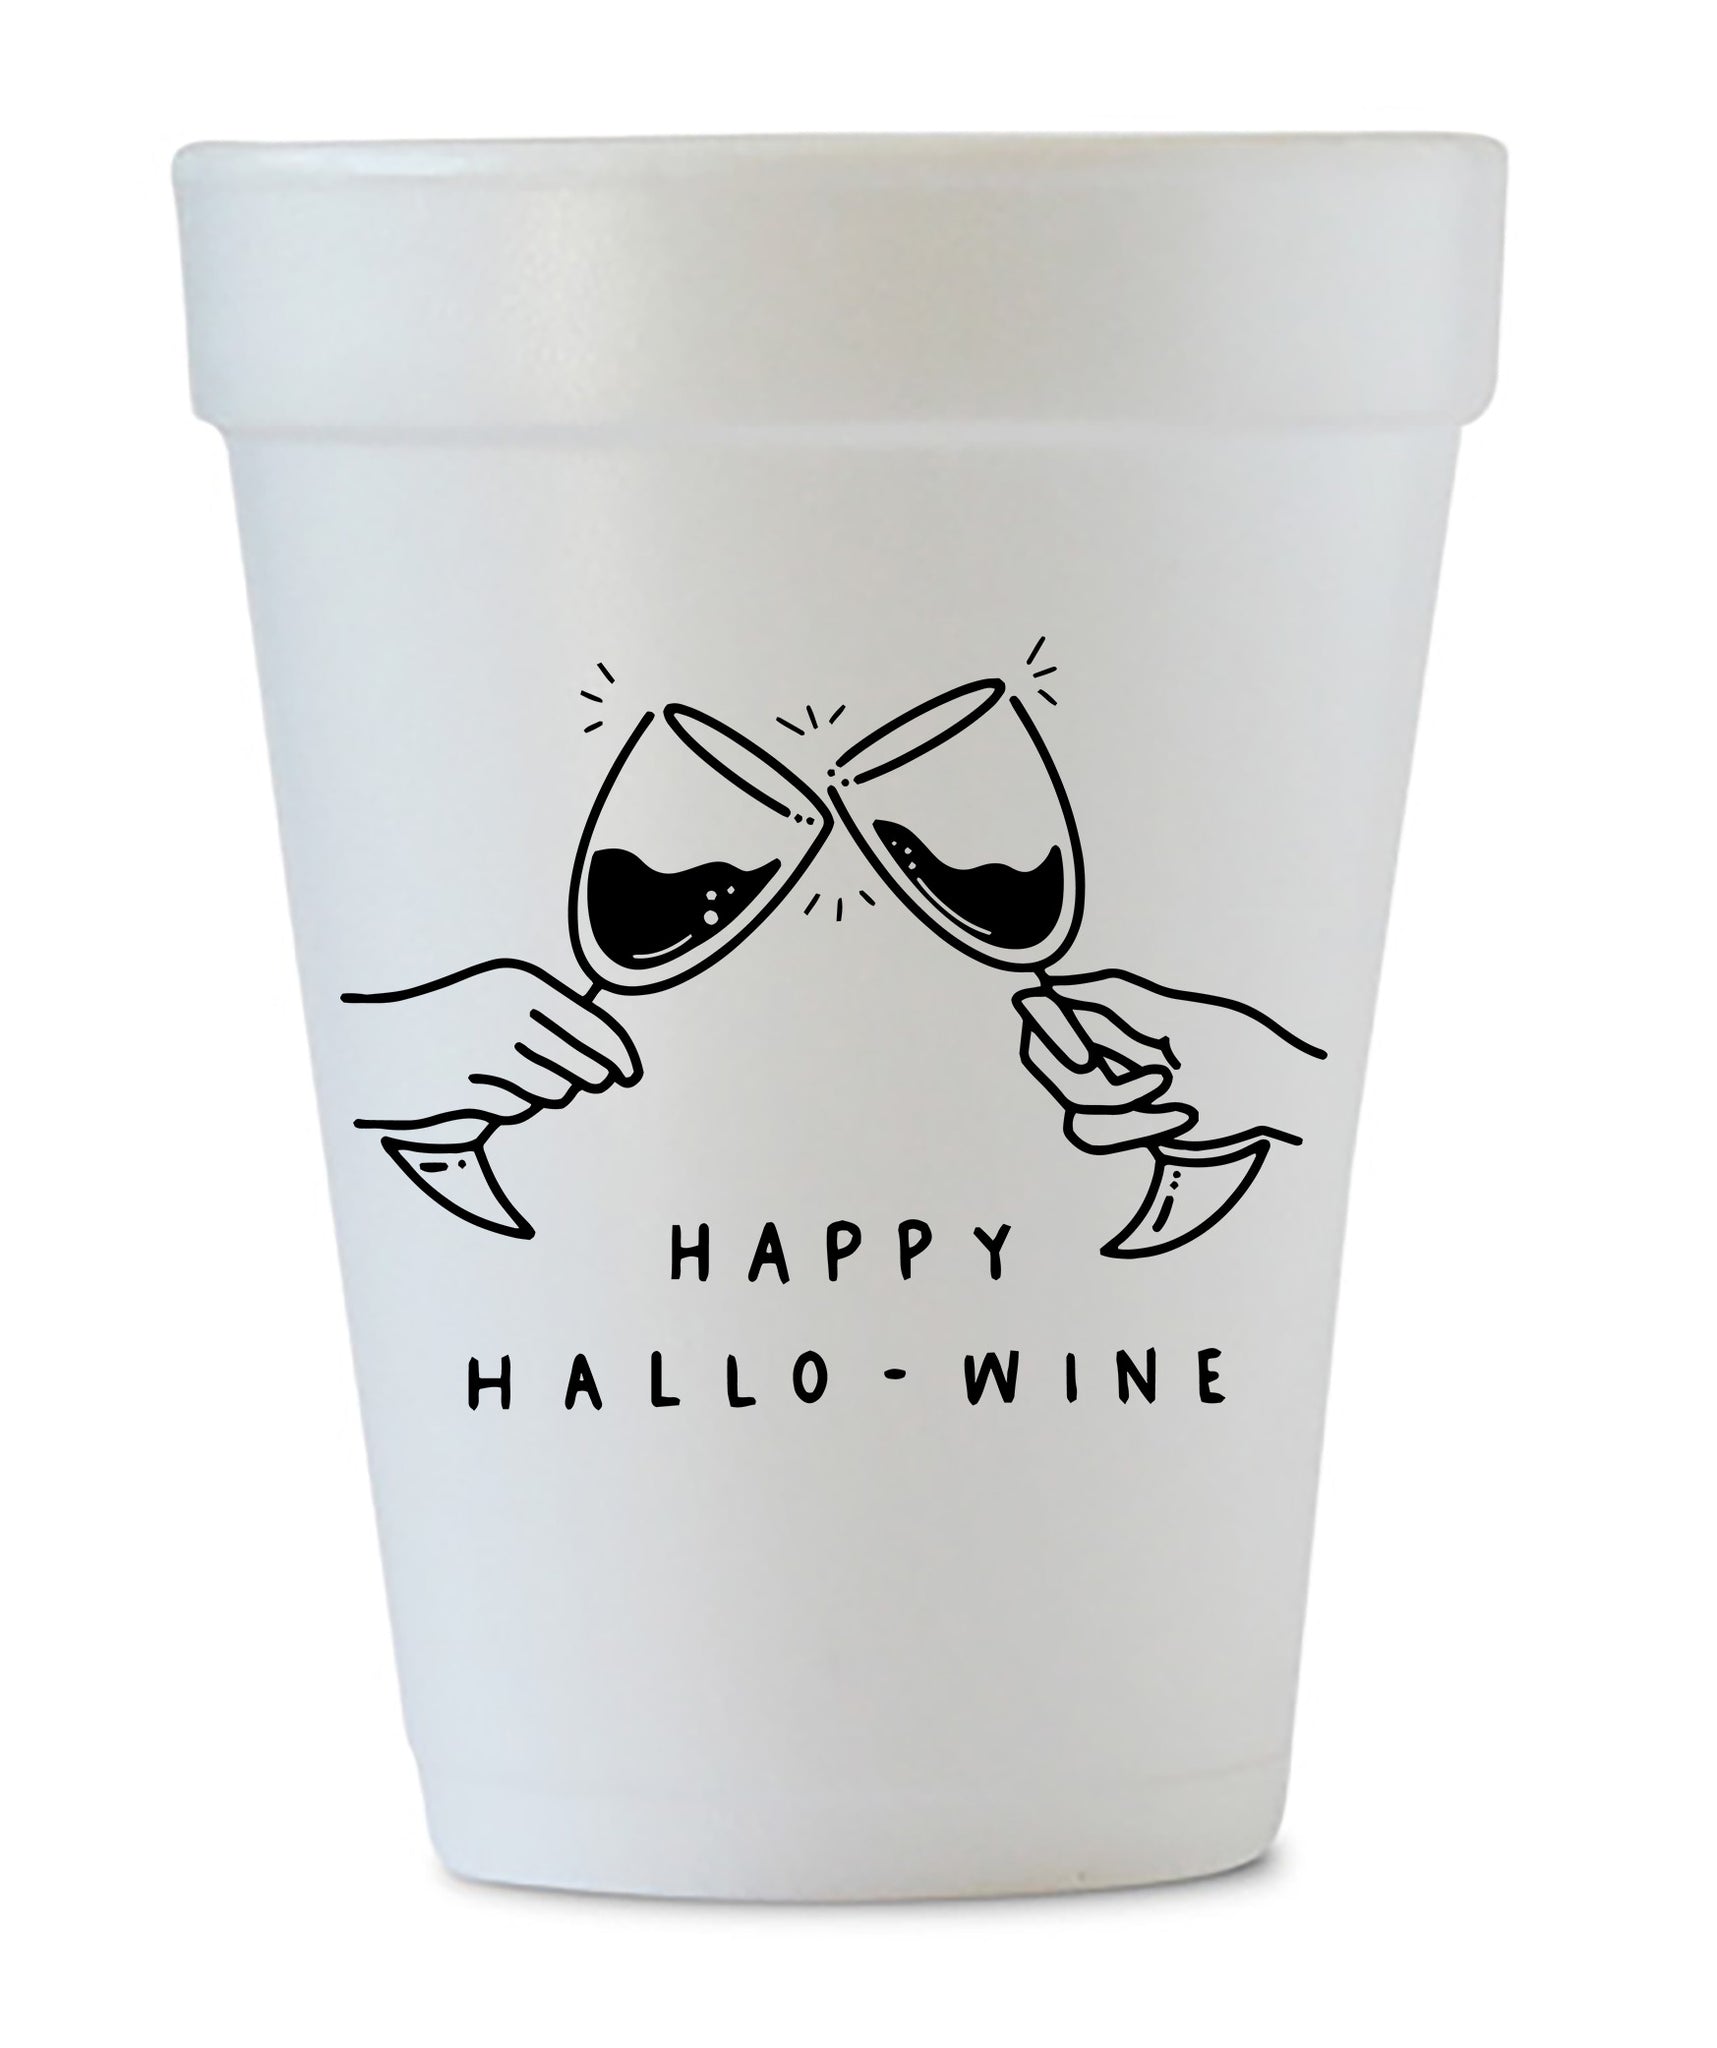 Happy Hallo-Wine Styrofoam Cups - Black